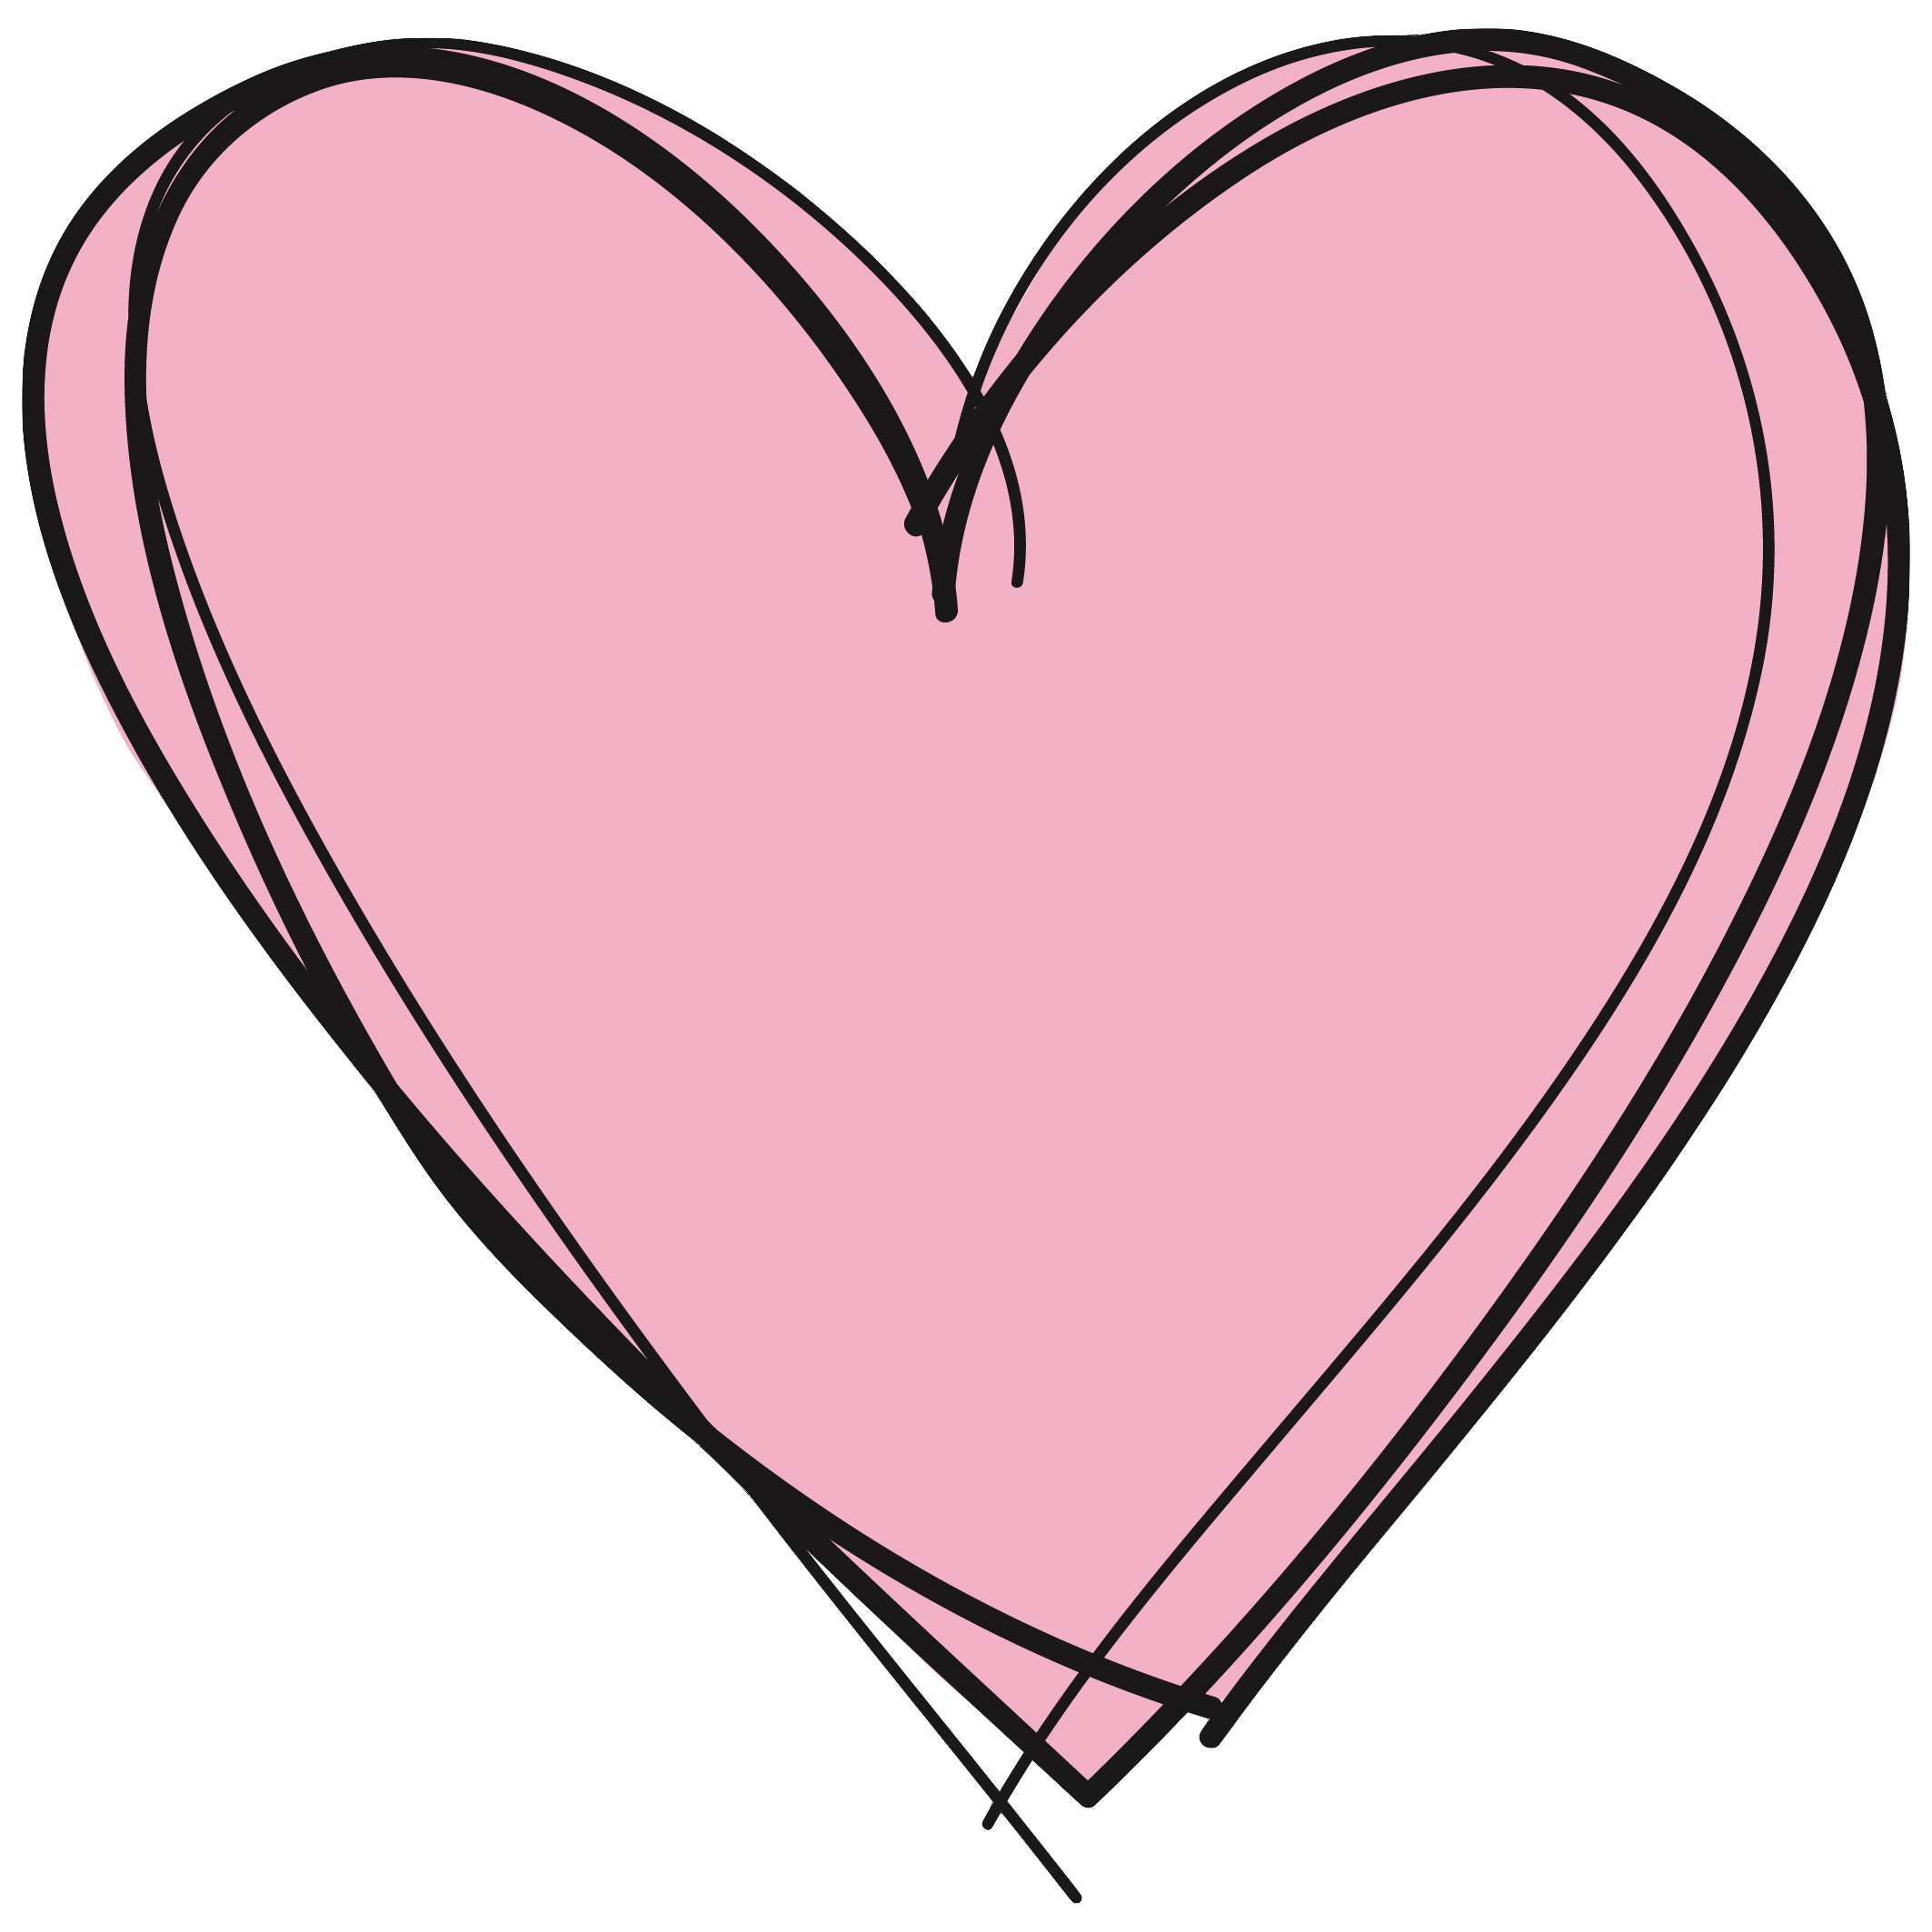 Heart,Love,Clip art,Organ,Line,Heart,Pink,Valentine's day,Human body,Graphics